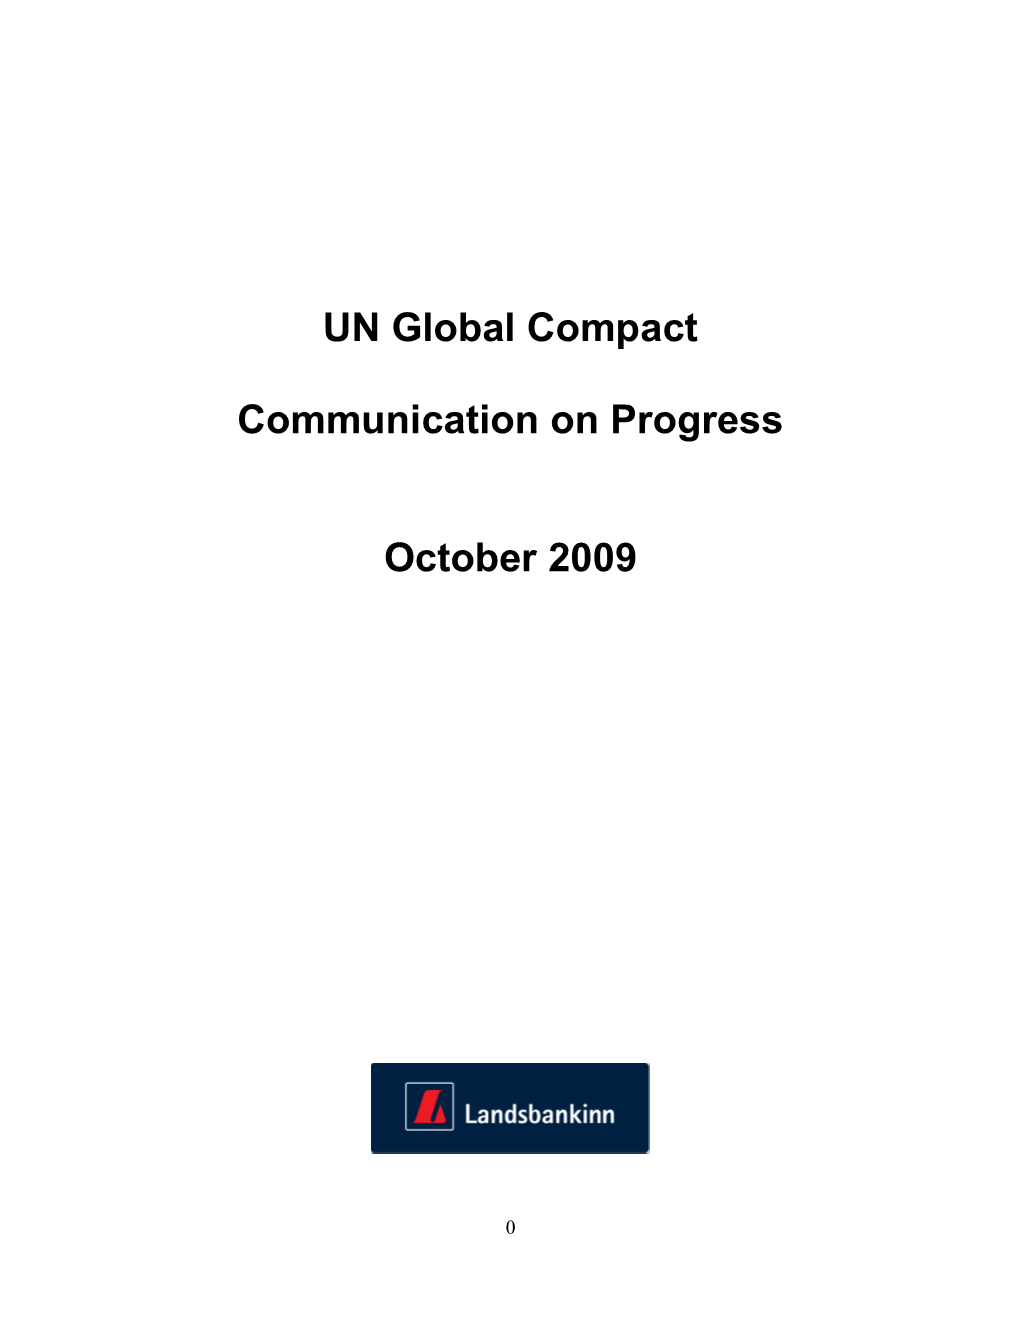 UN Global Compact Communication on Progress October 2009